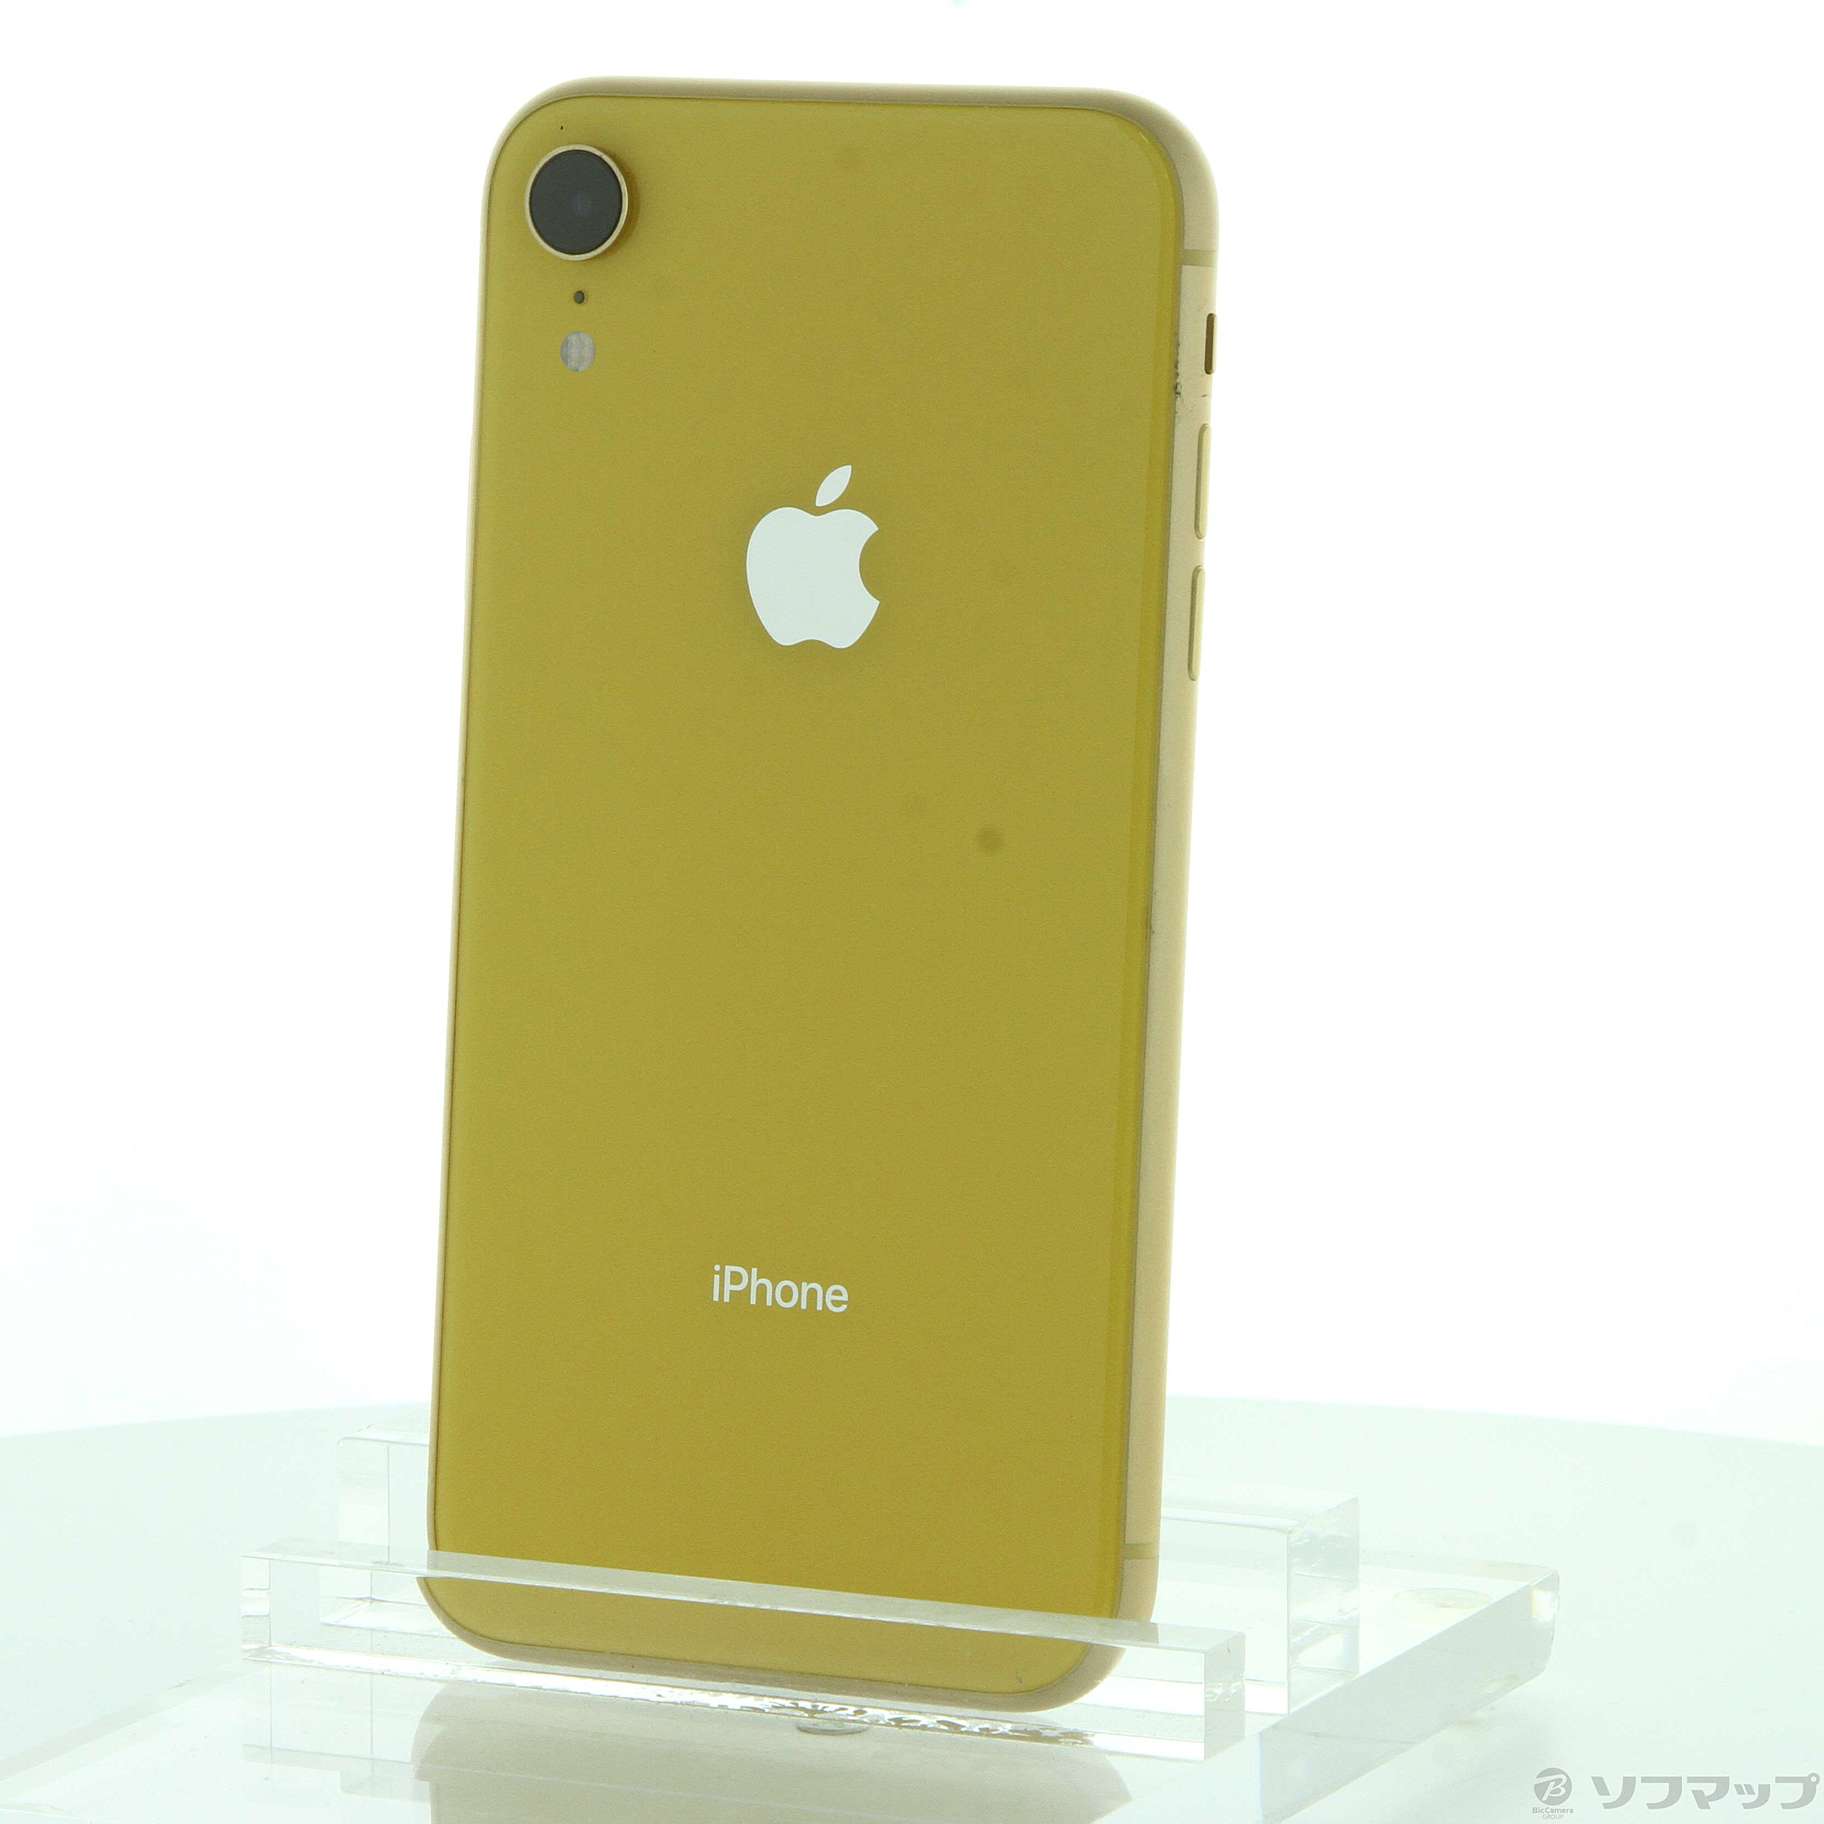 iPhone XR Yellow 256 GB Softbank - スマートフォン本体